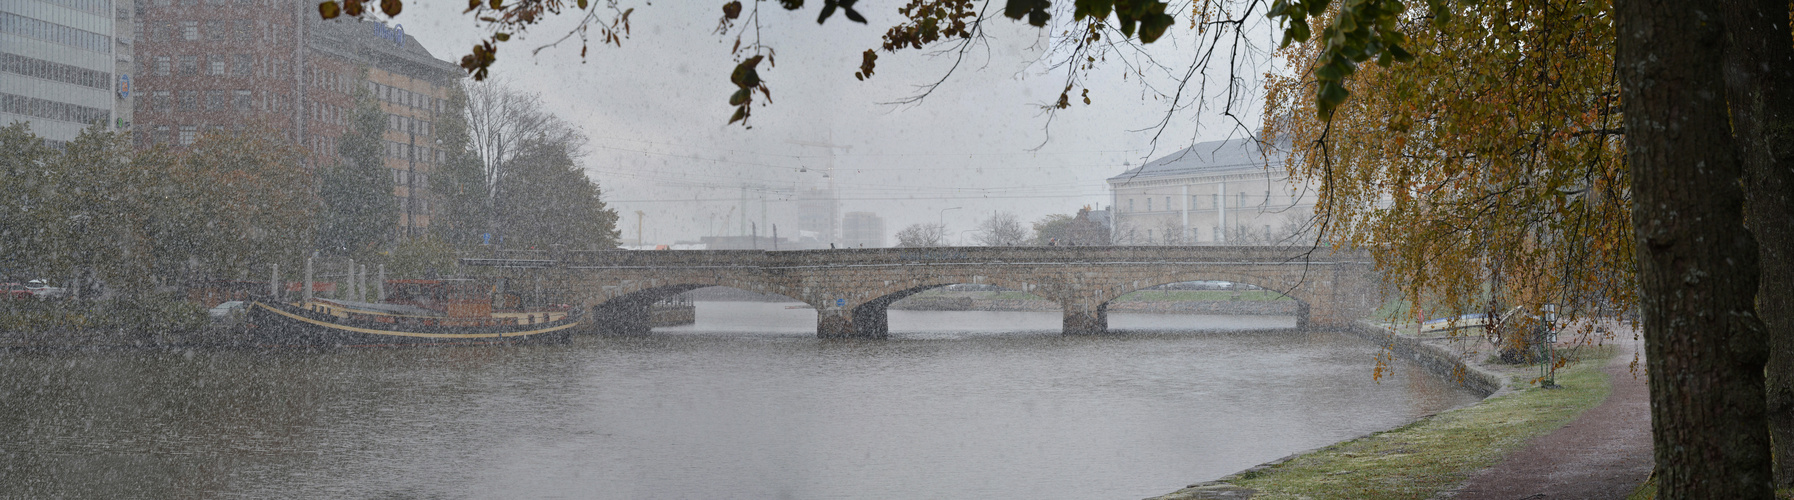 The Long bridge on rainy day